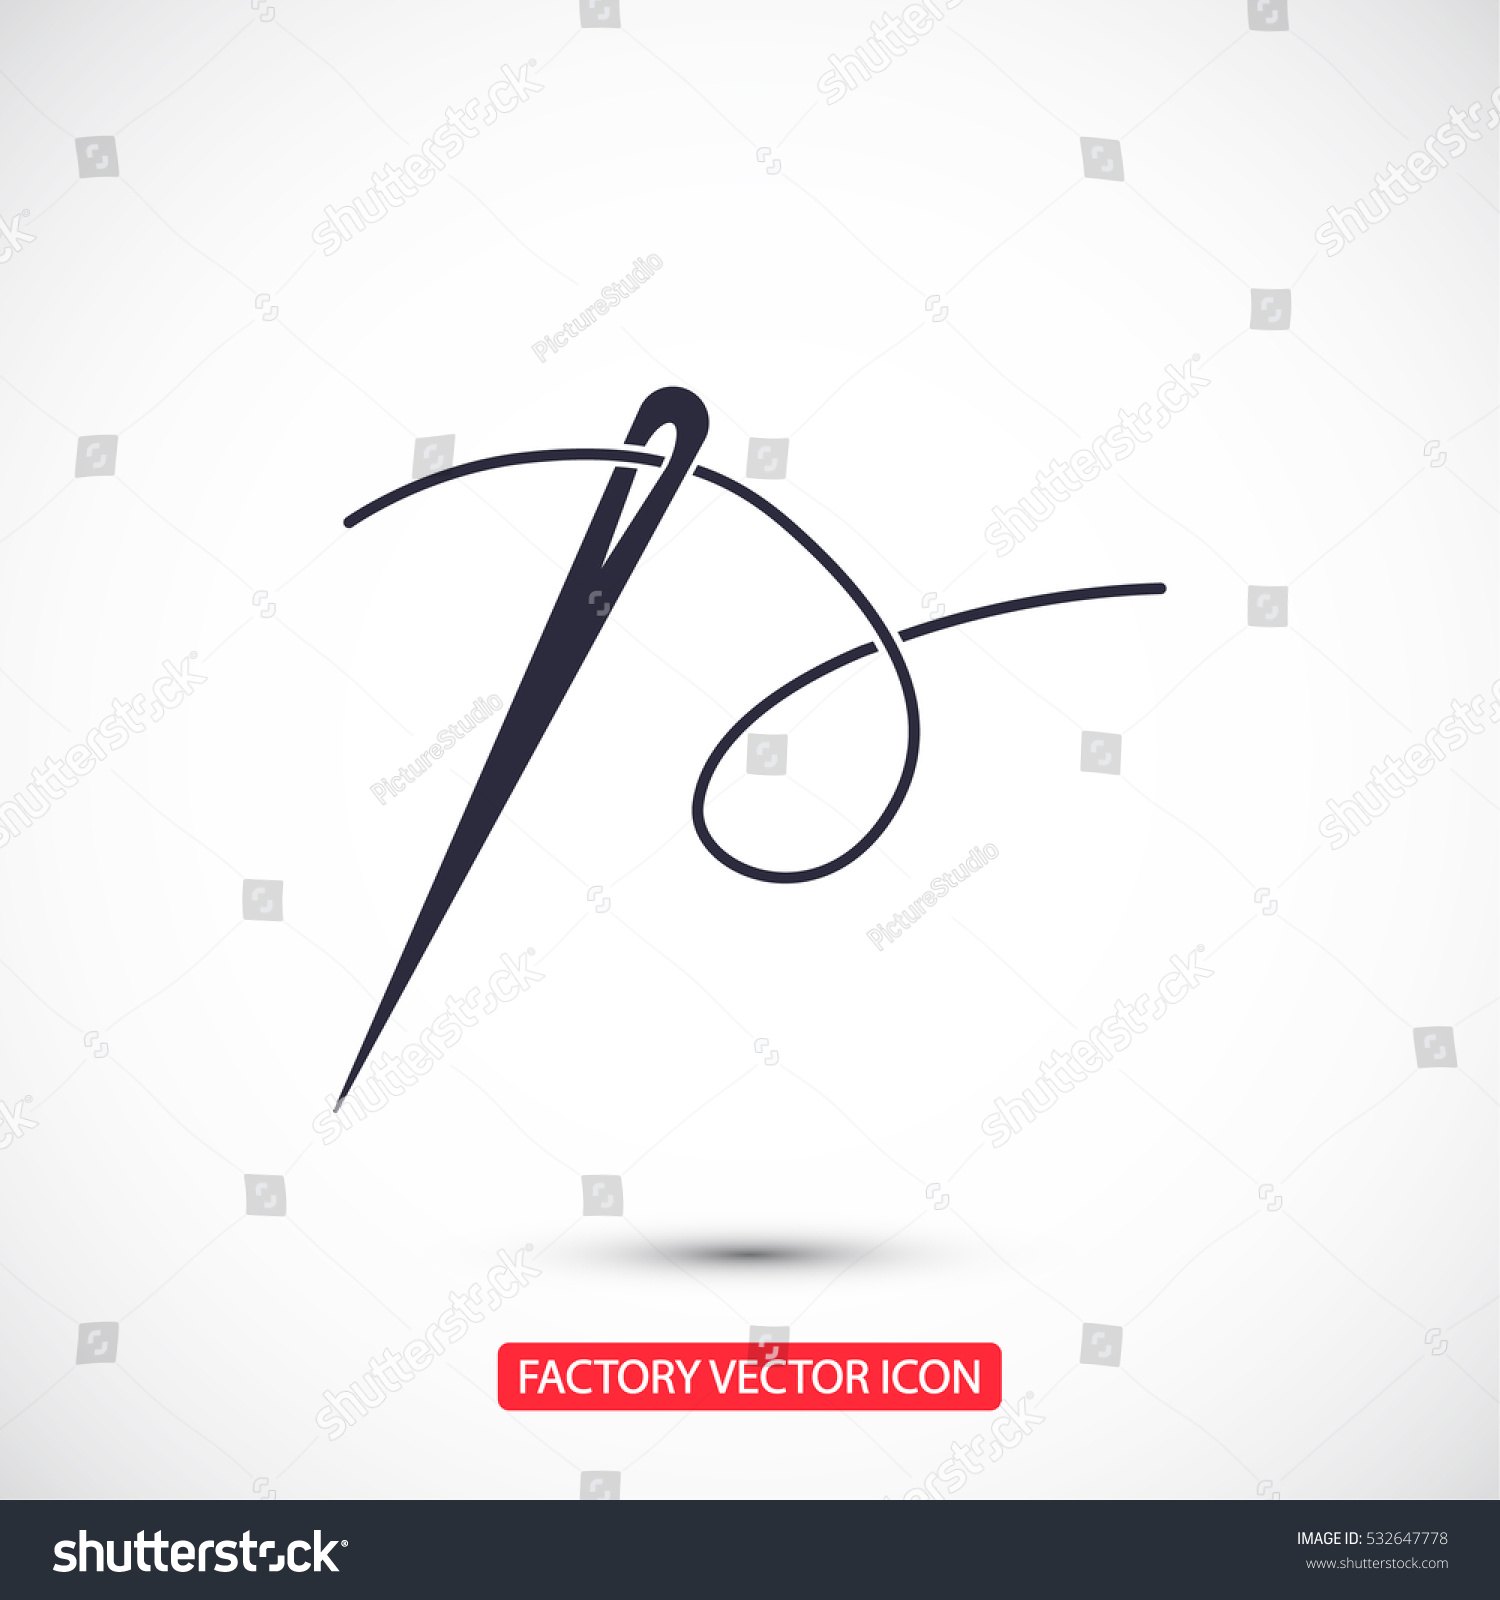 Needle Icon. Vector Eps 10 - 532647778 : Shutterstock